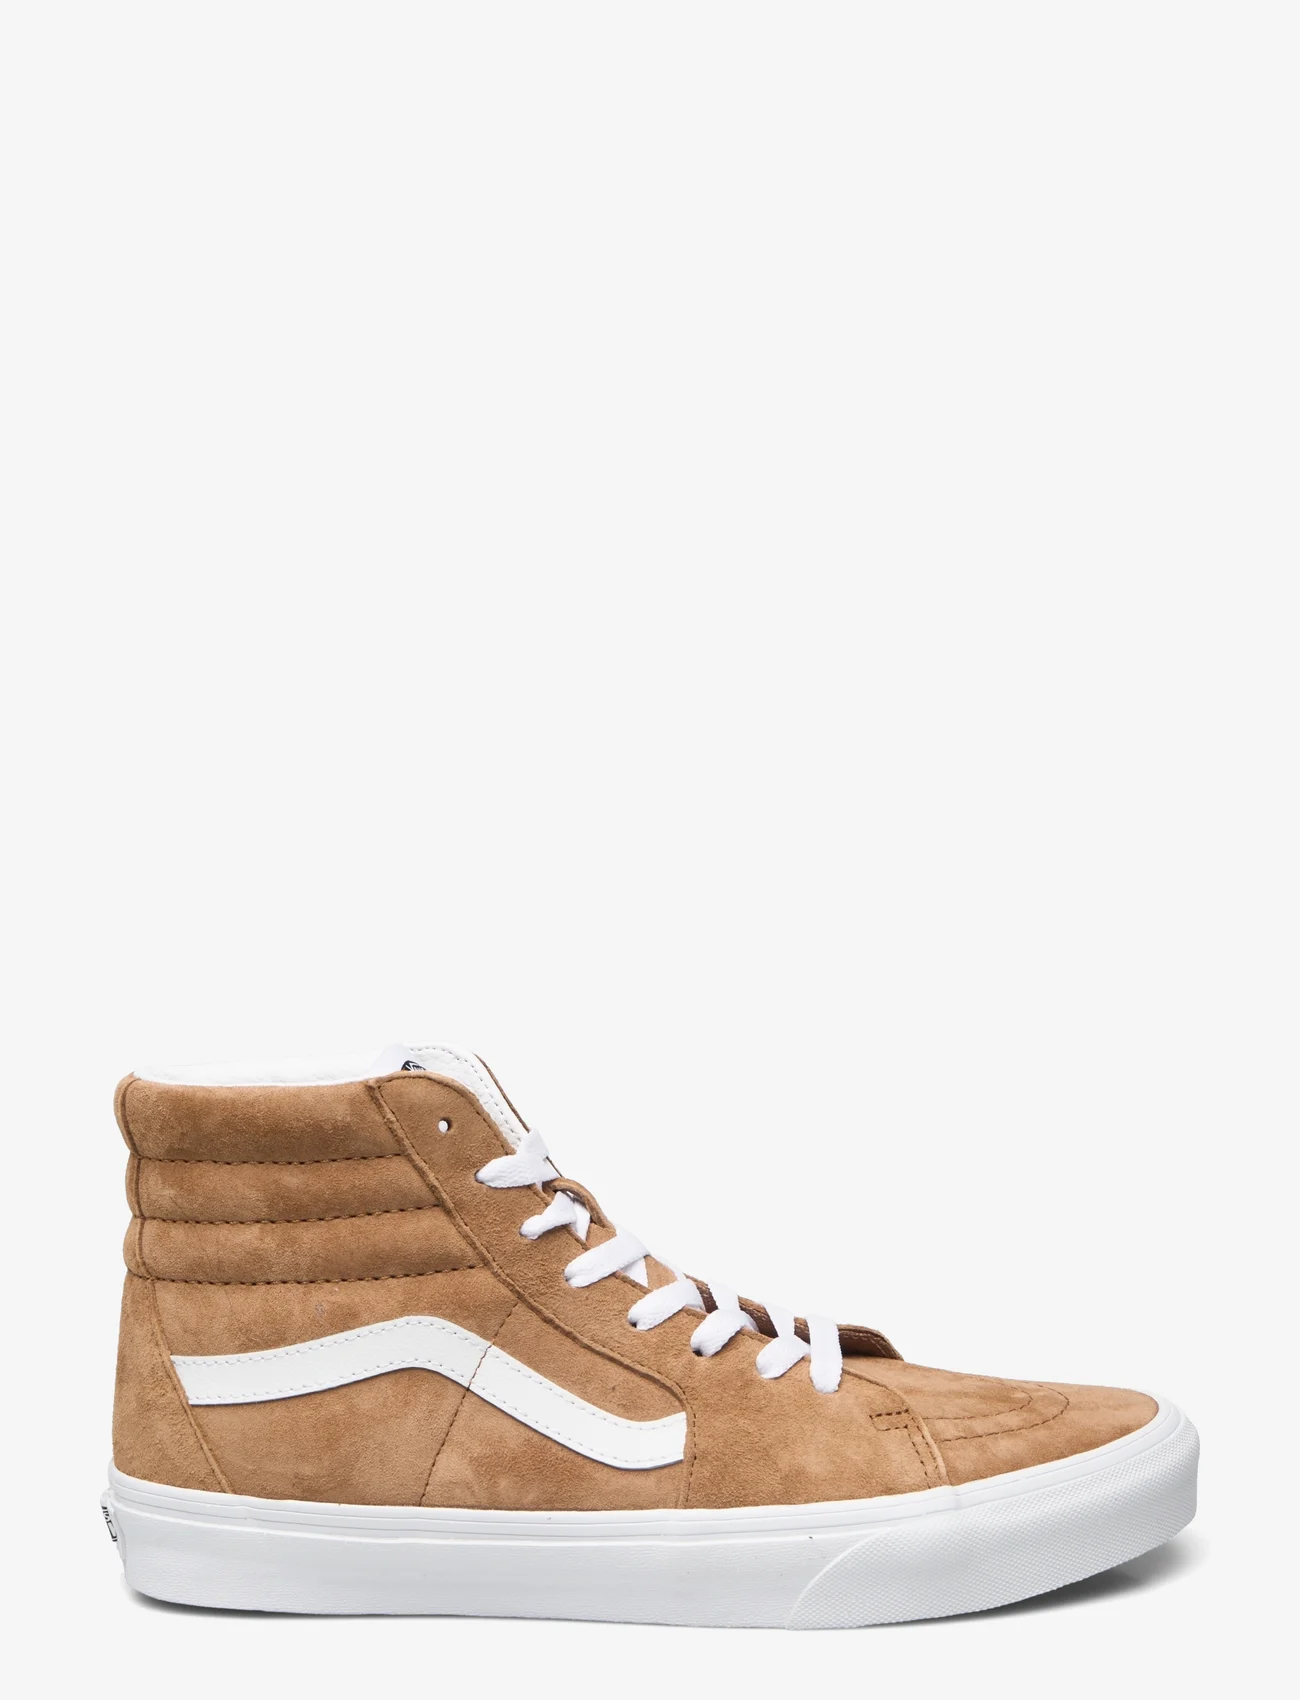 VANS - UA SK8-Hi - hohe sneakers - tobacco brown - 1